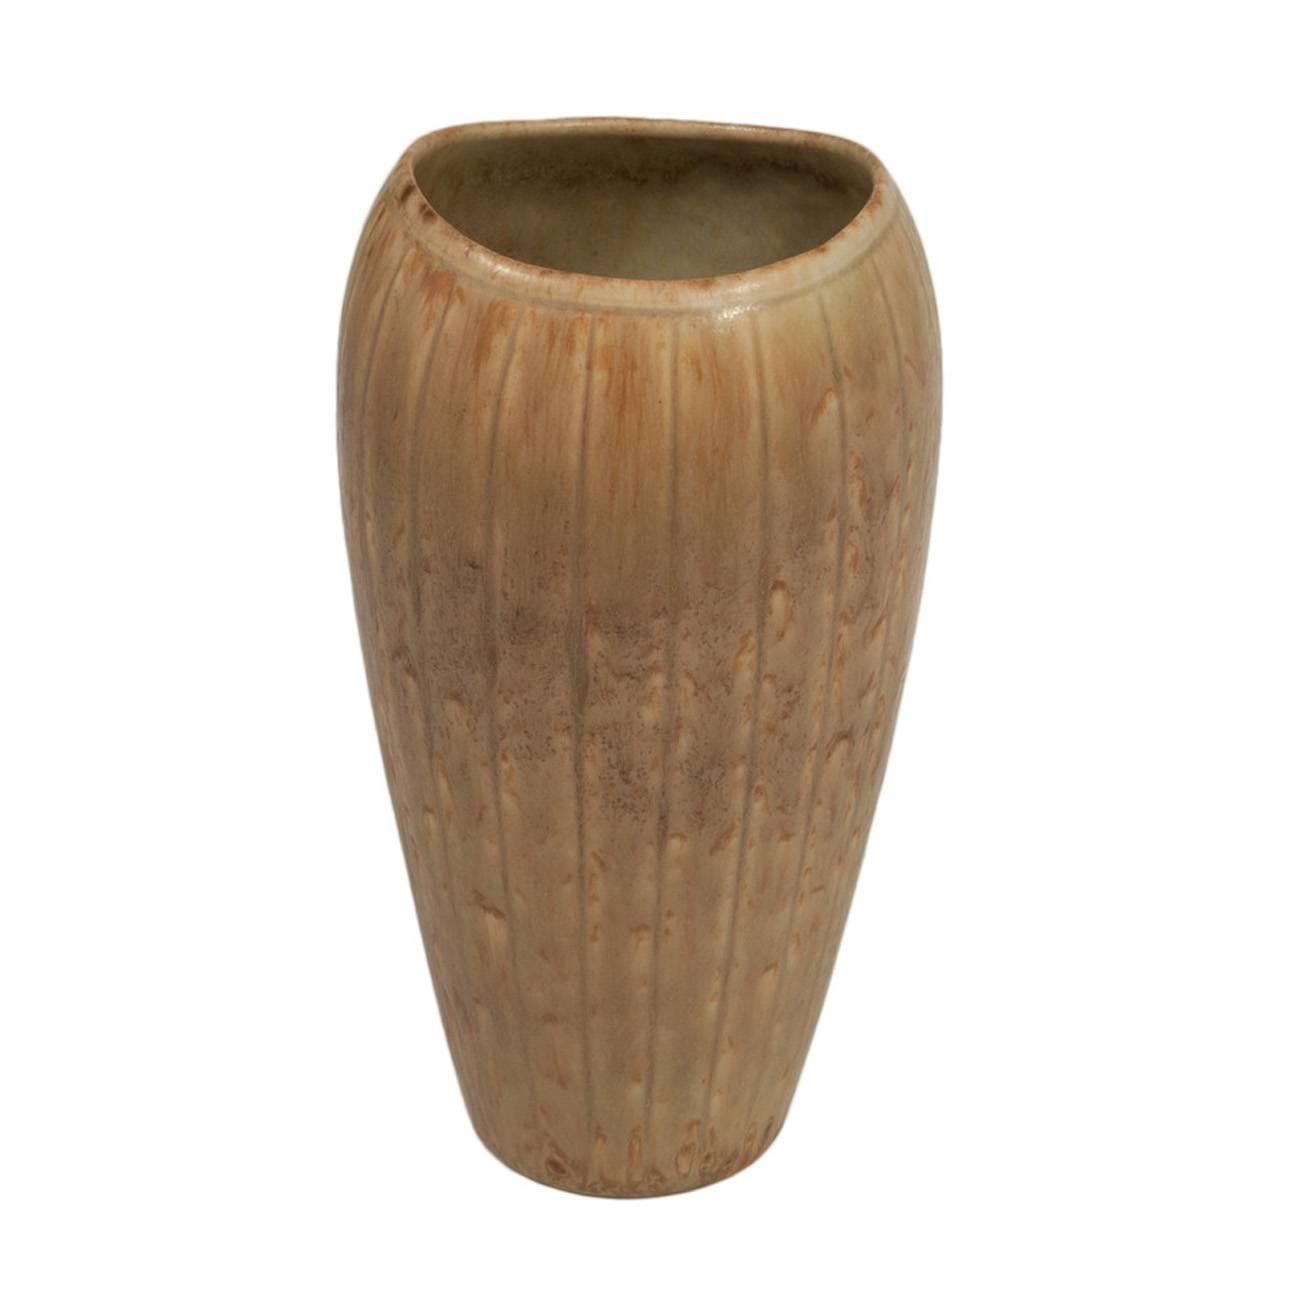 A beautifully glazed Mid-Century ceramic vase by Gunnar Nylund for Rorstrand. Maker's mark on bottom.